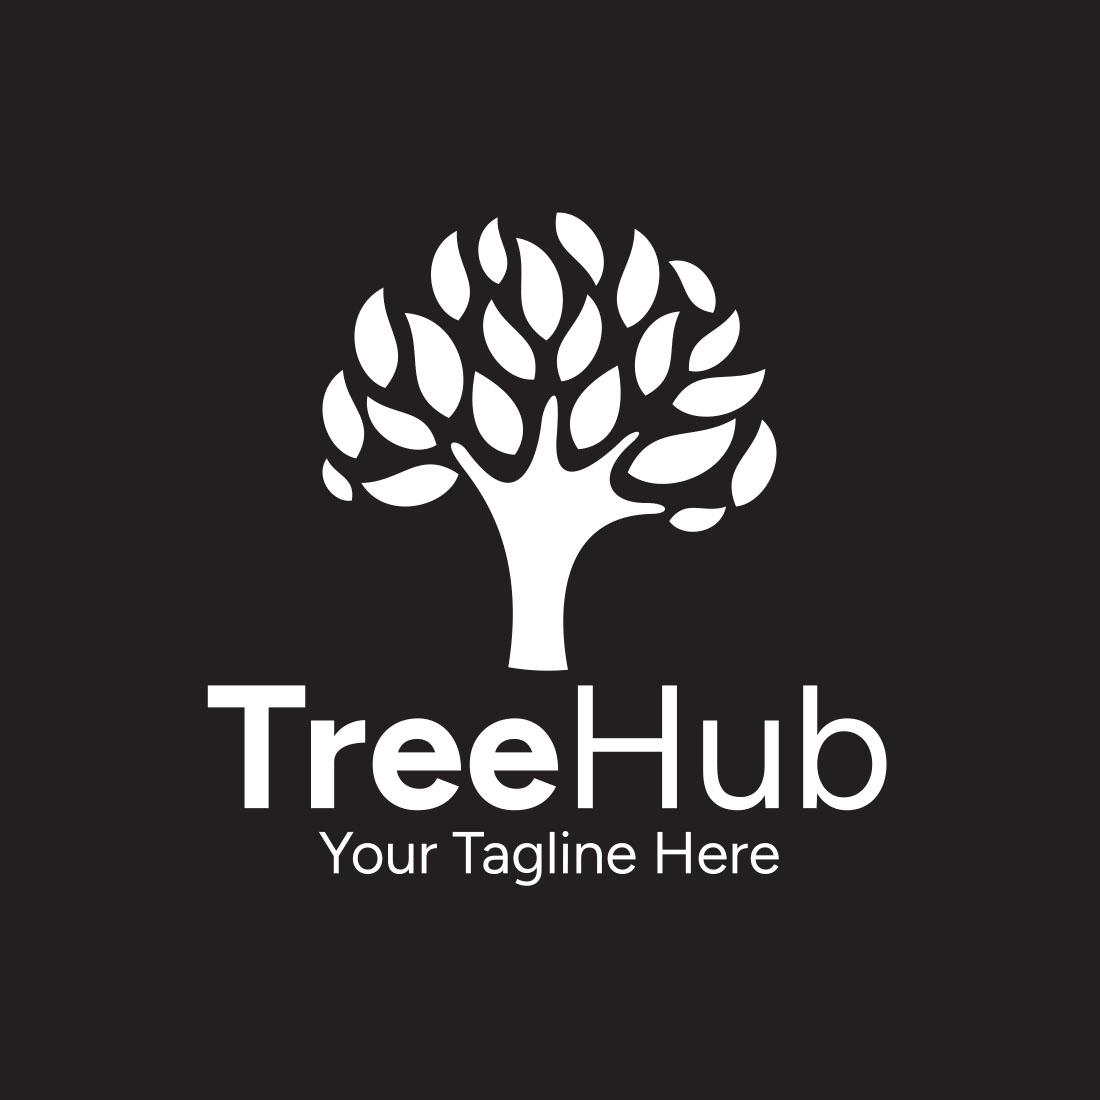 Tree Hub Logo Template with dark background.